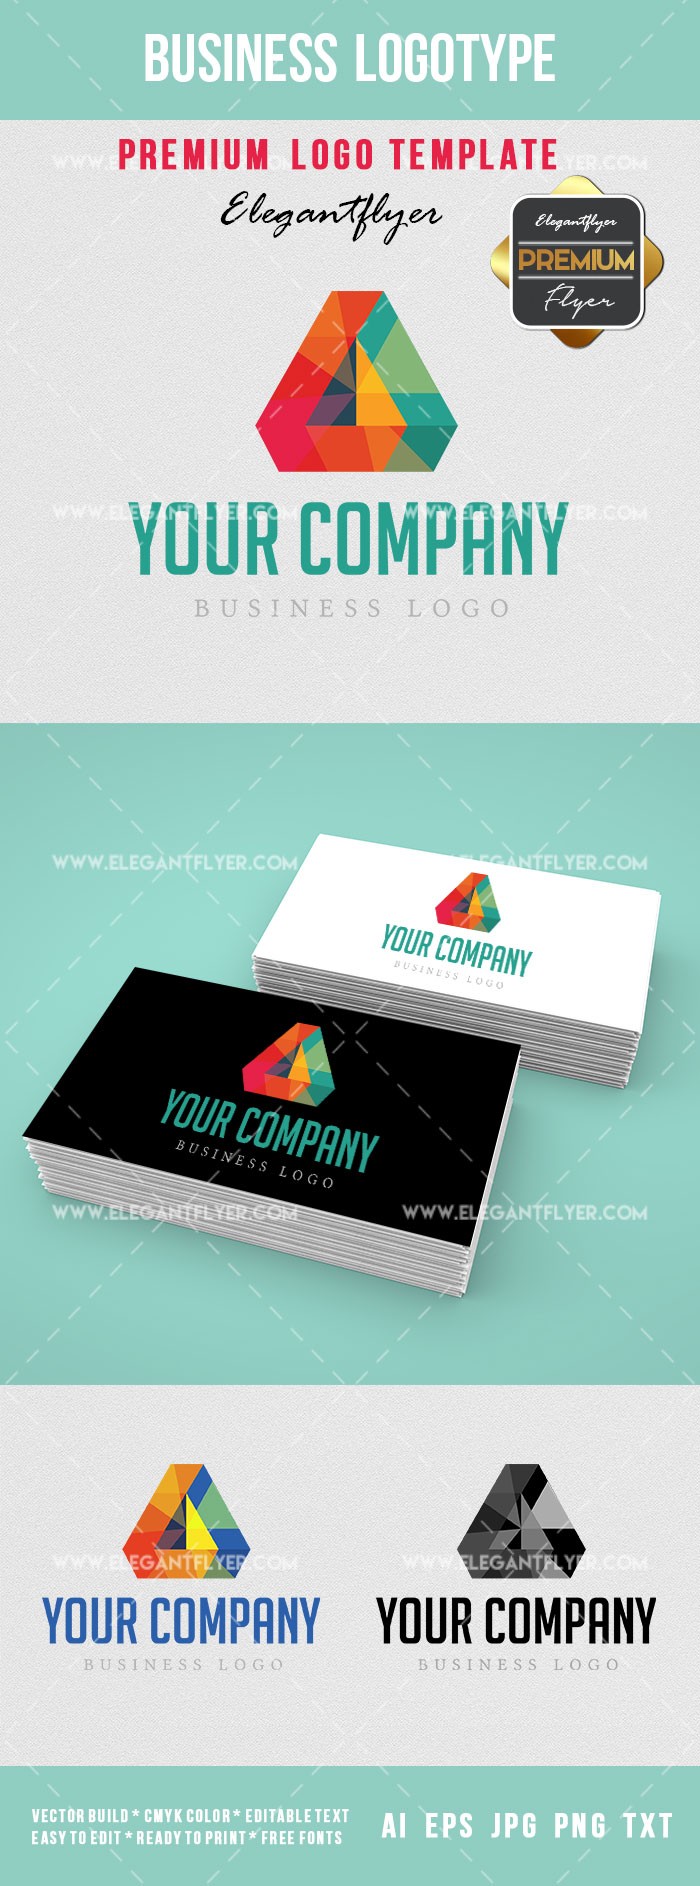 Business Logotype by ElegantFlyer